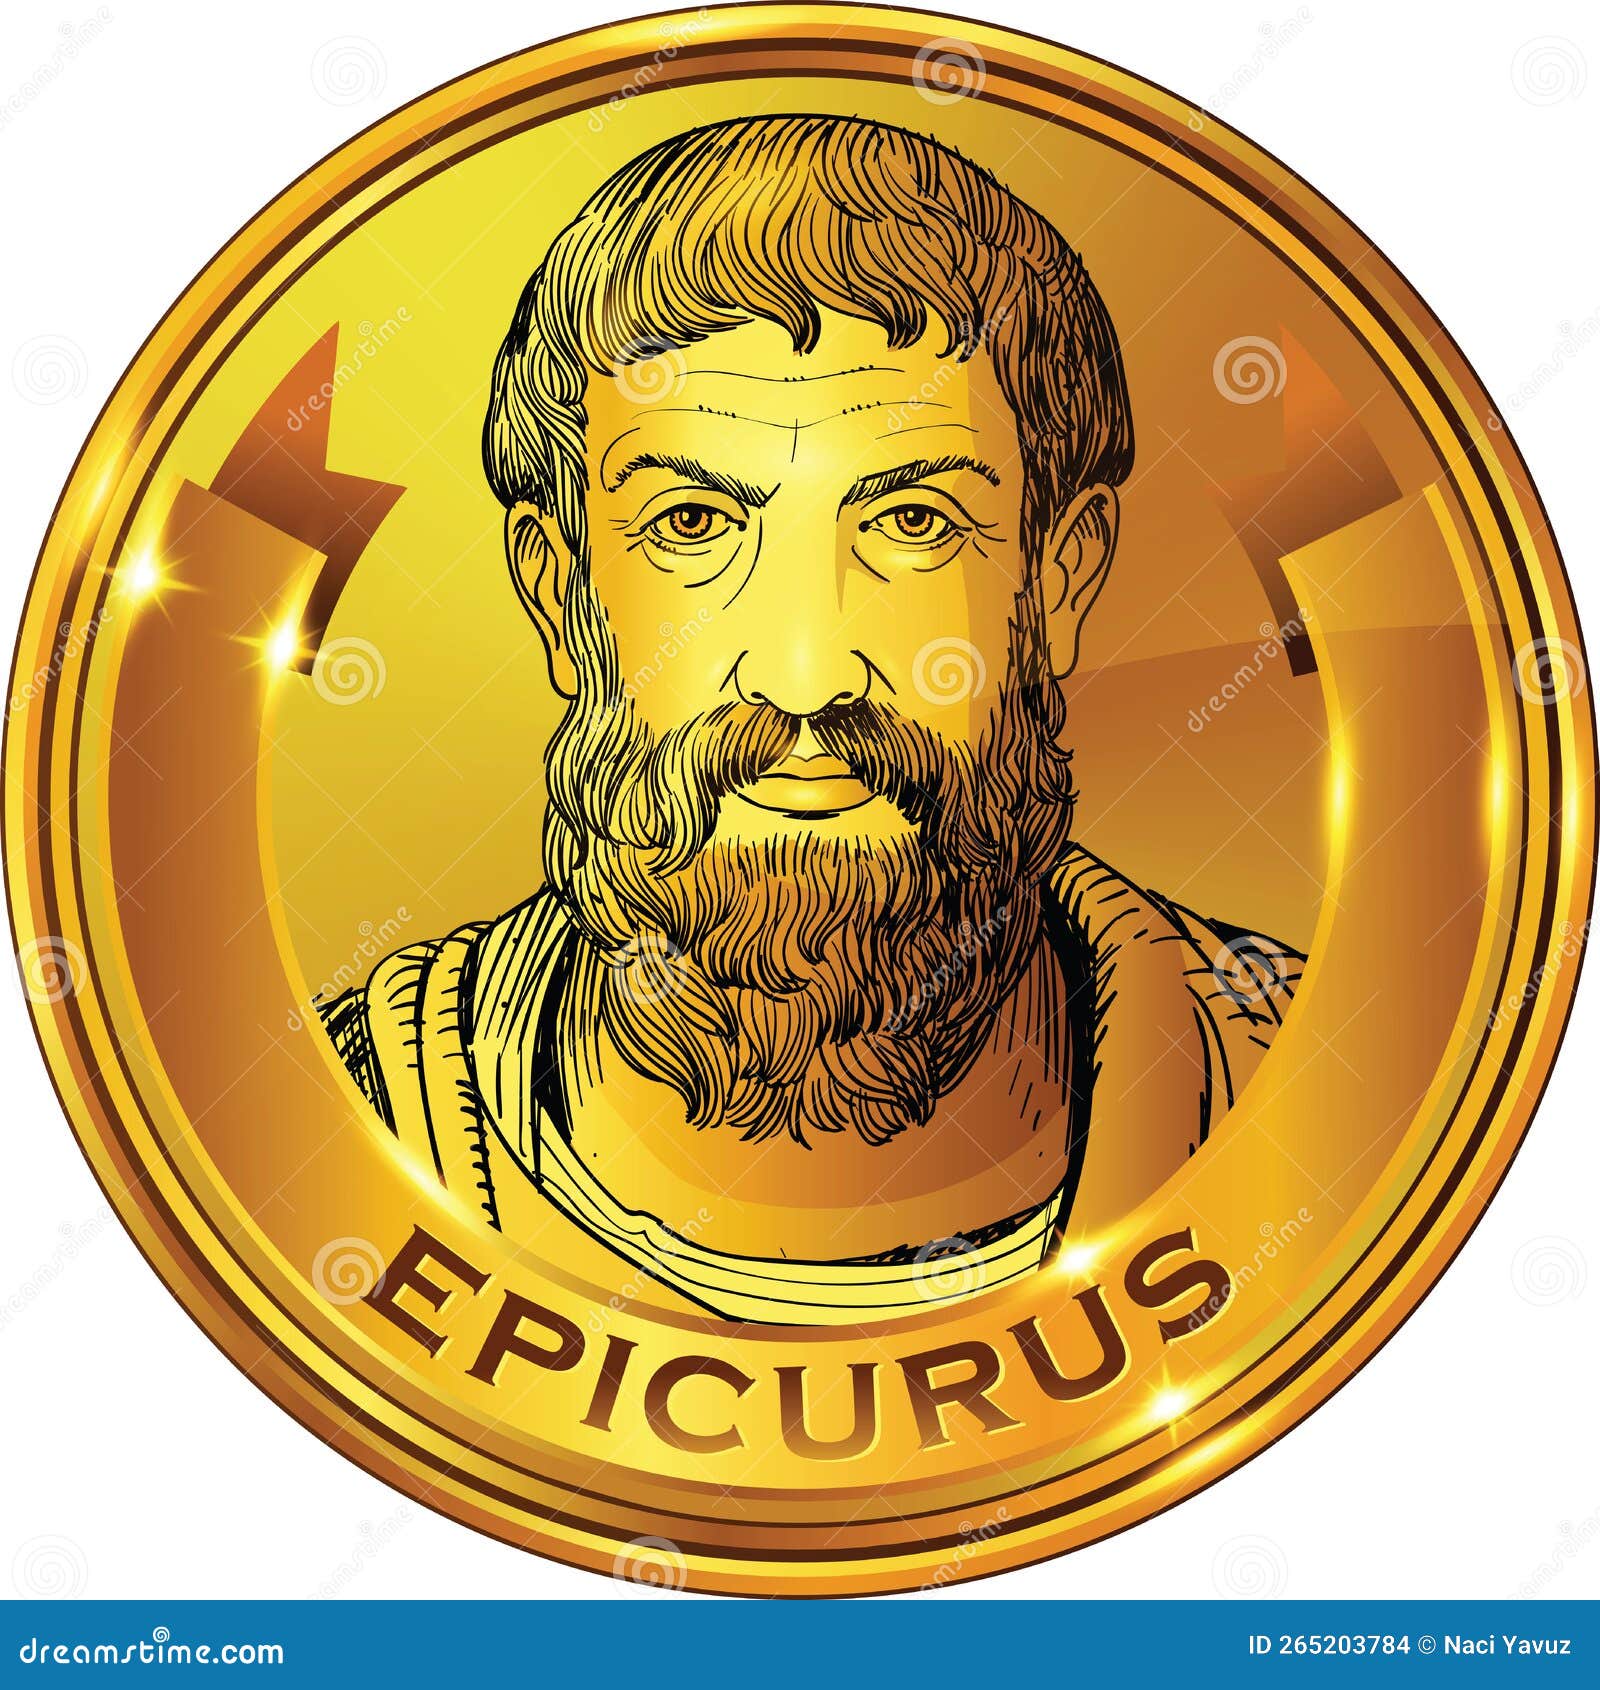 philosopher epicurus golden style portrait